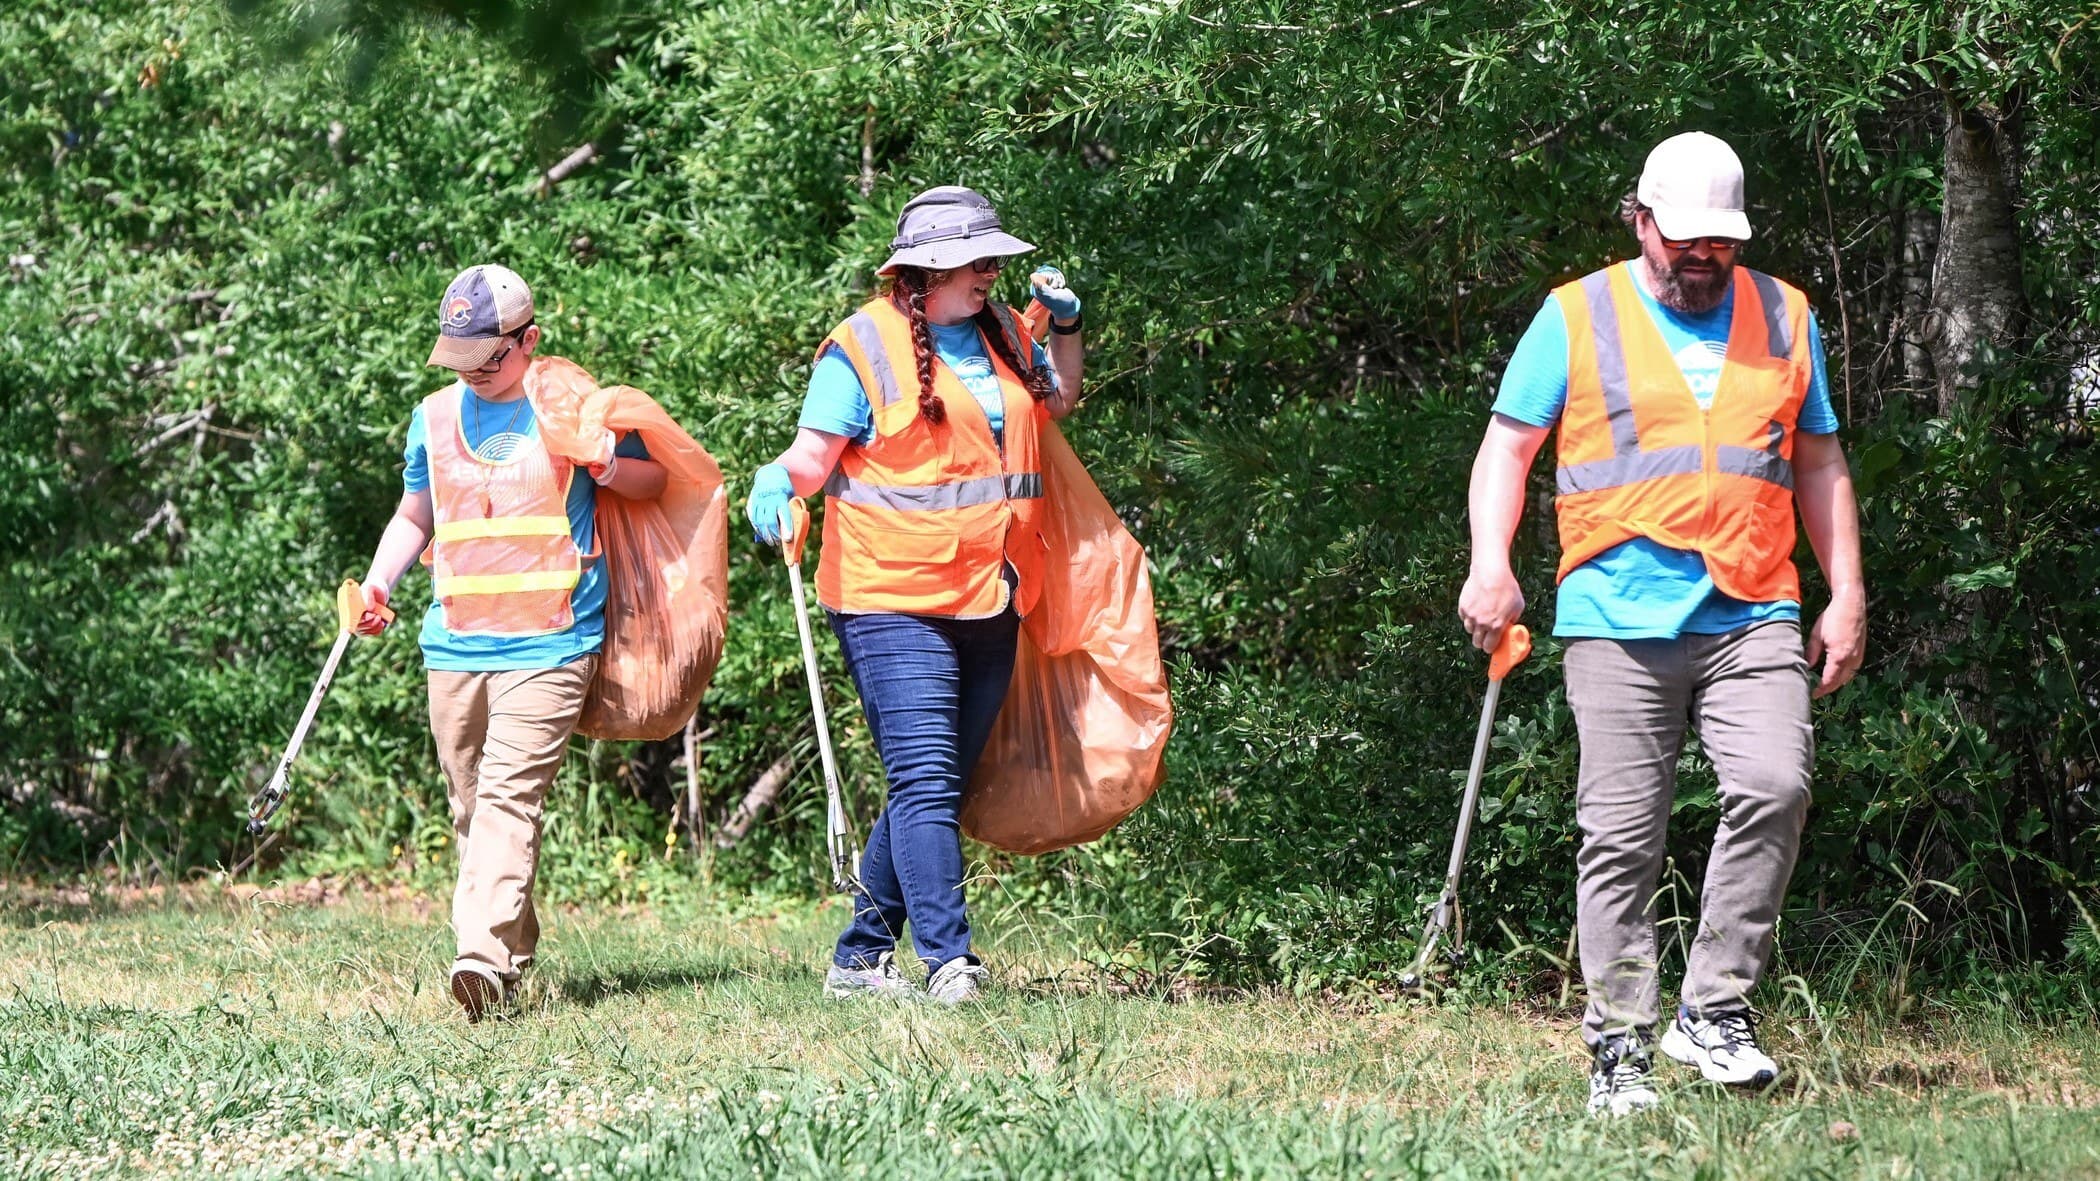 Creek Cleanup volunteers in high vis vests search for trash